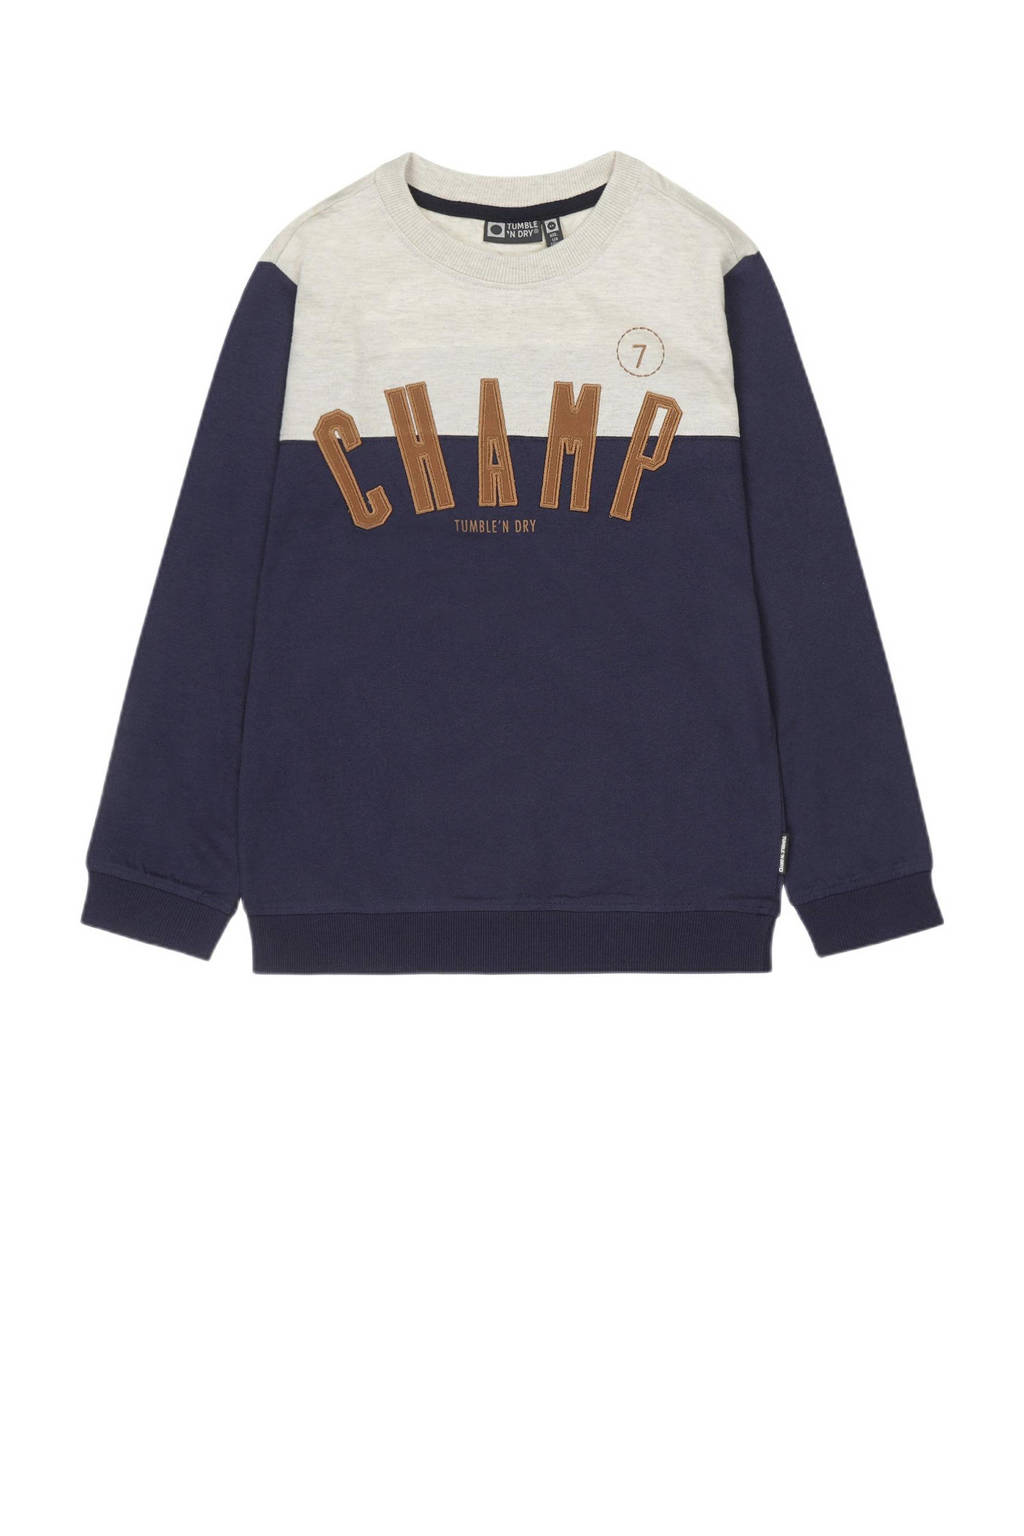 Tumble 'n Dry Mid sweater Michigan met logo donkerblauw/grijs/bruin